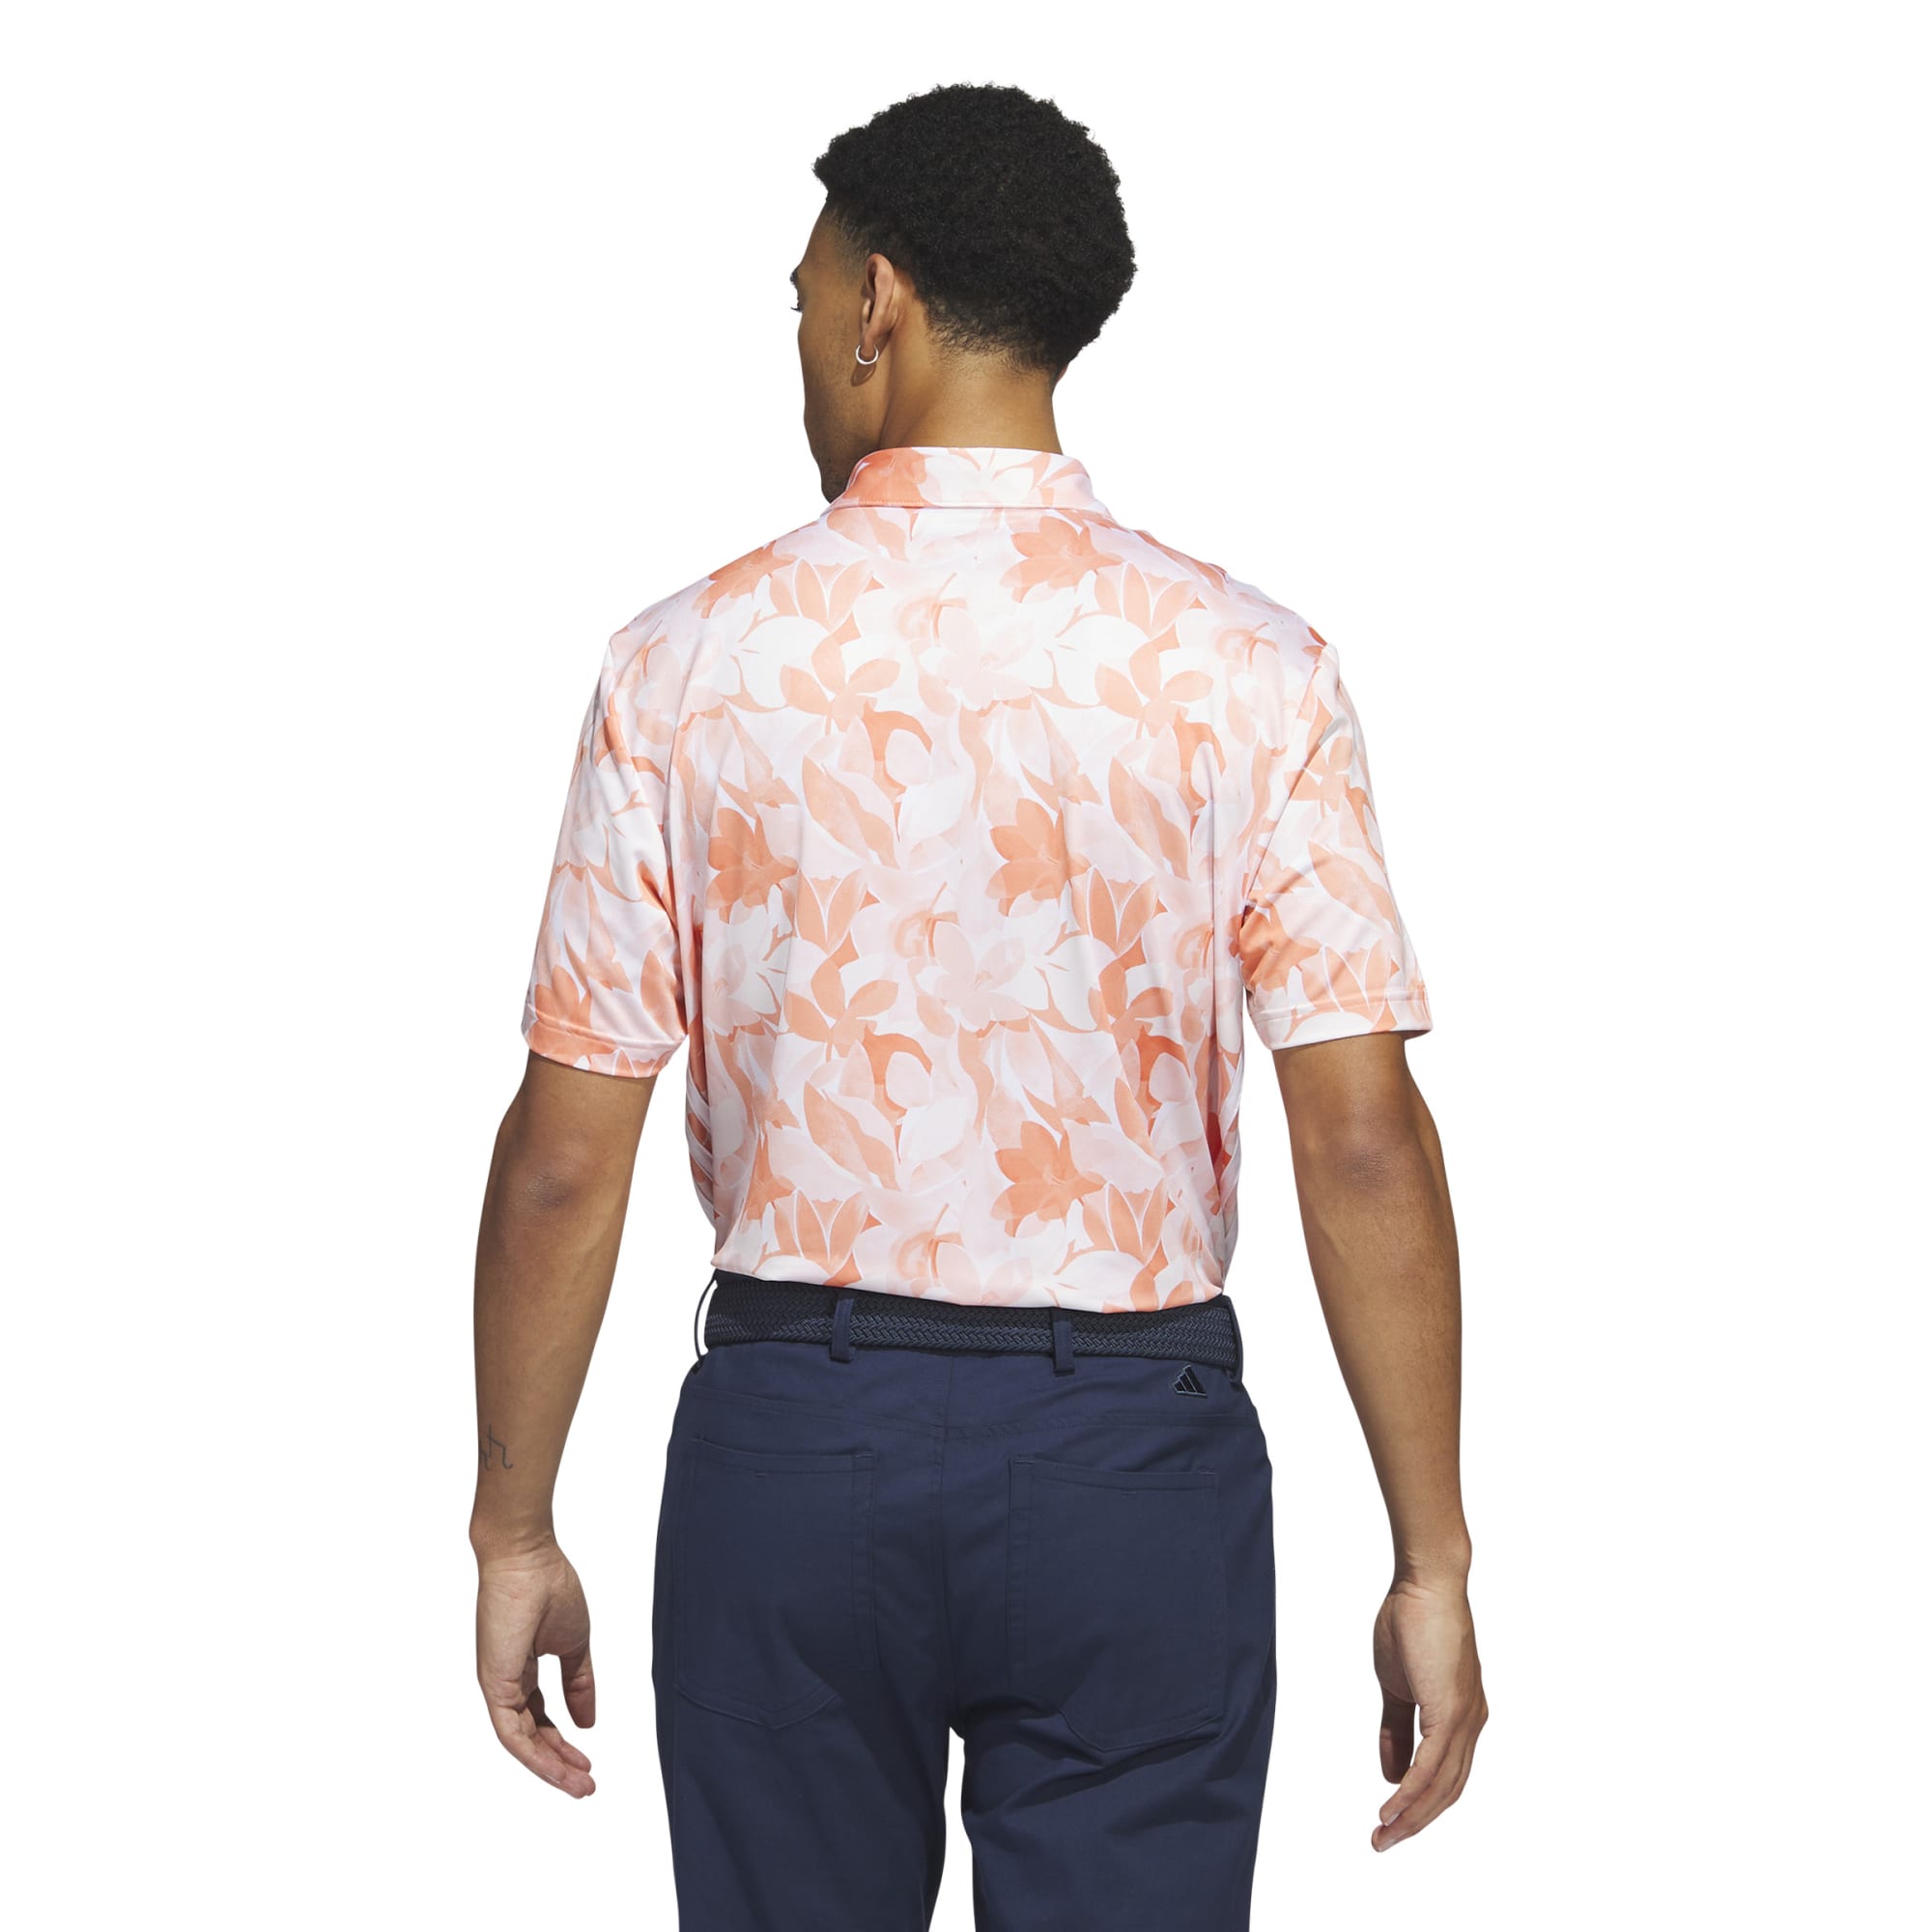 adidas Golf Floral Print Mens Polo Shirt  - Coral Fusion/White